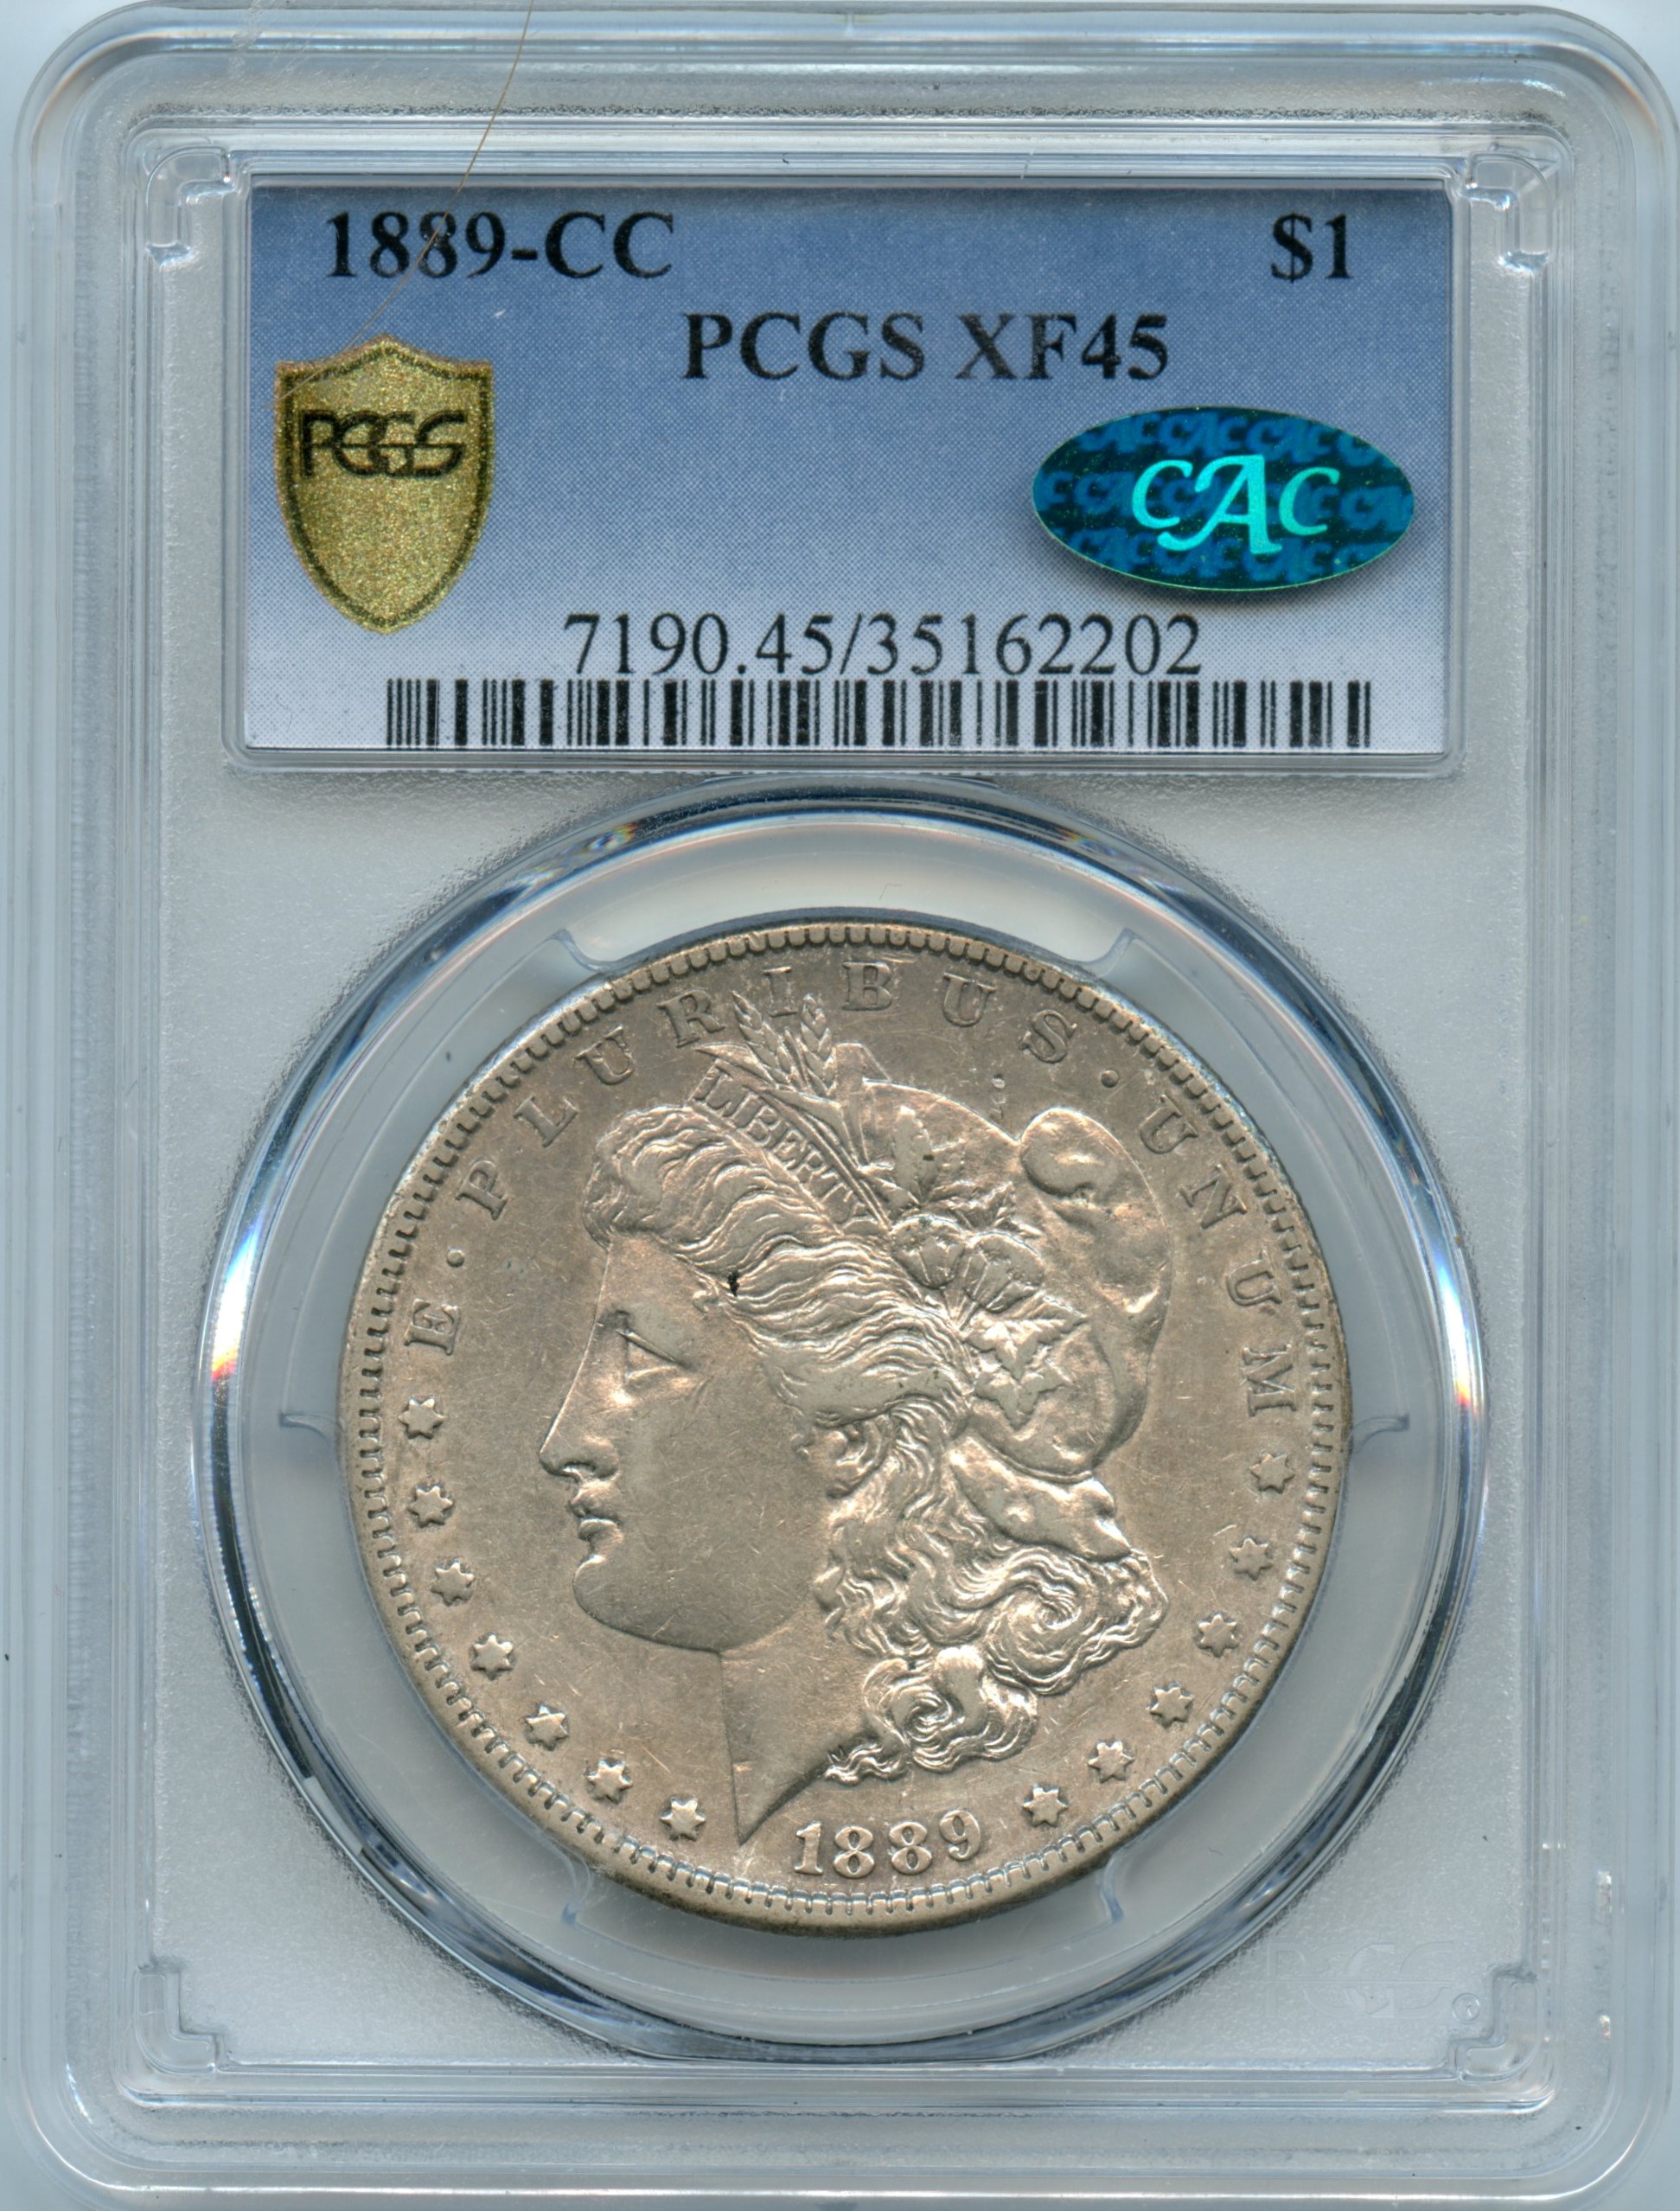 1889-CC Morgan Silver Dollar $1 - Certified PCGS XF45 - American Rare